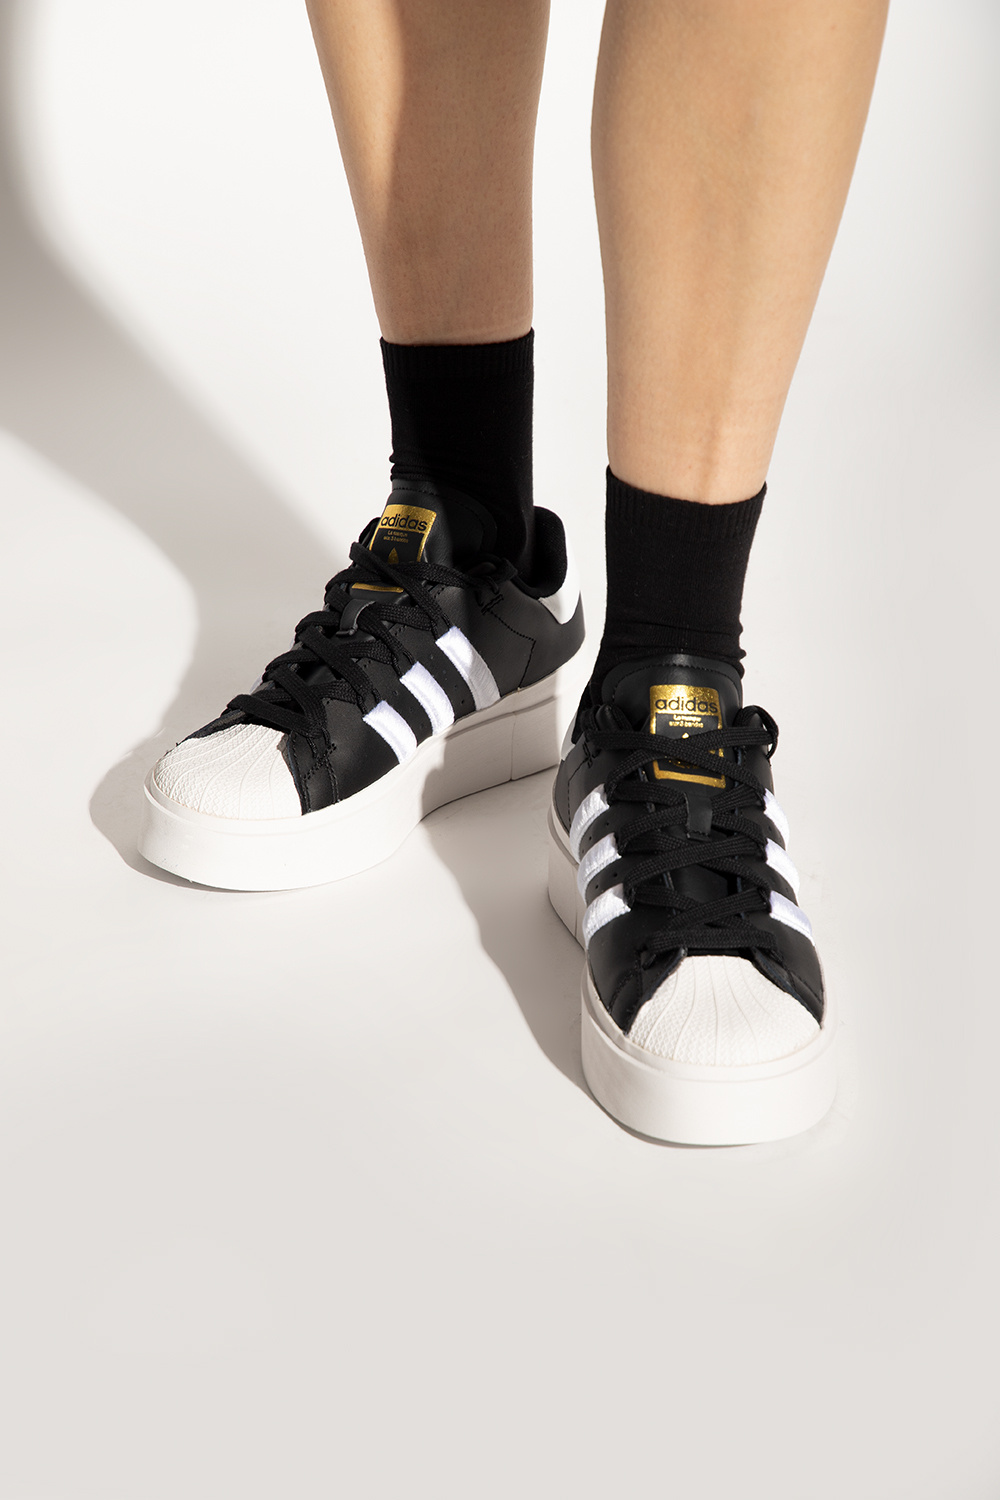 ADIDAS Originals 'Superstar Bonega W' platform sneakers | Women's